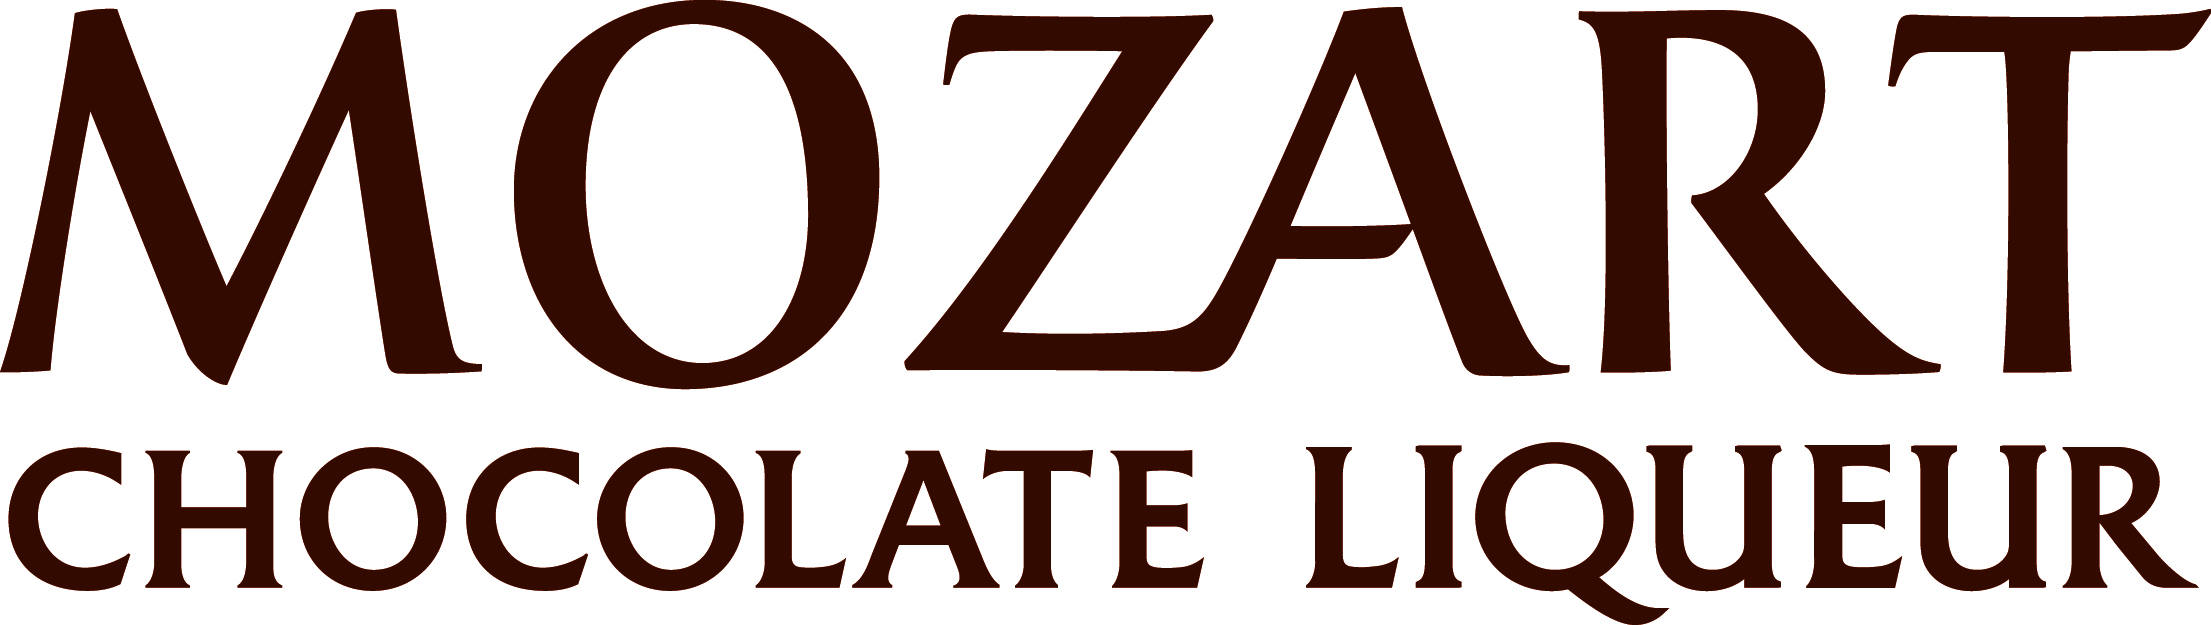 Mozart Destillerie GmbH 